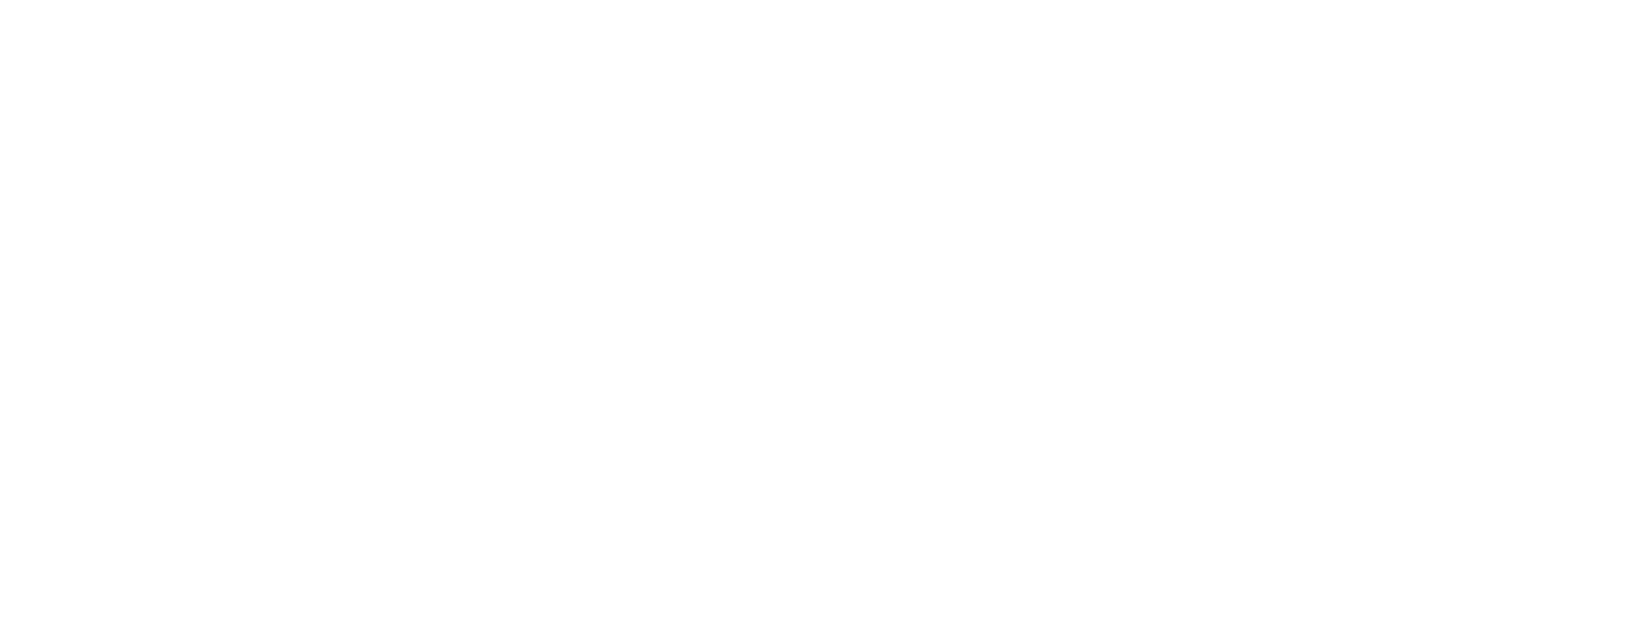 CSX Corporation logo for dark backgrounds (transparent PNG)